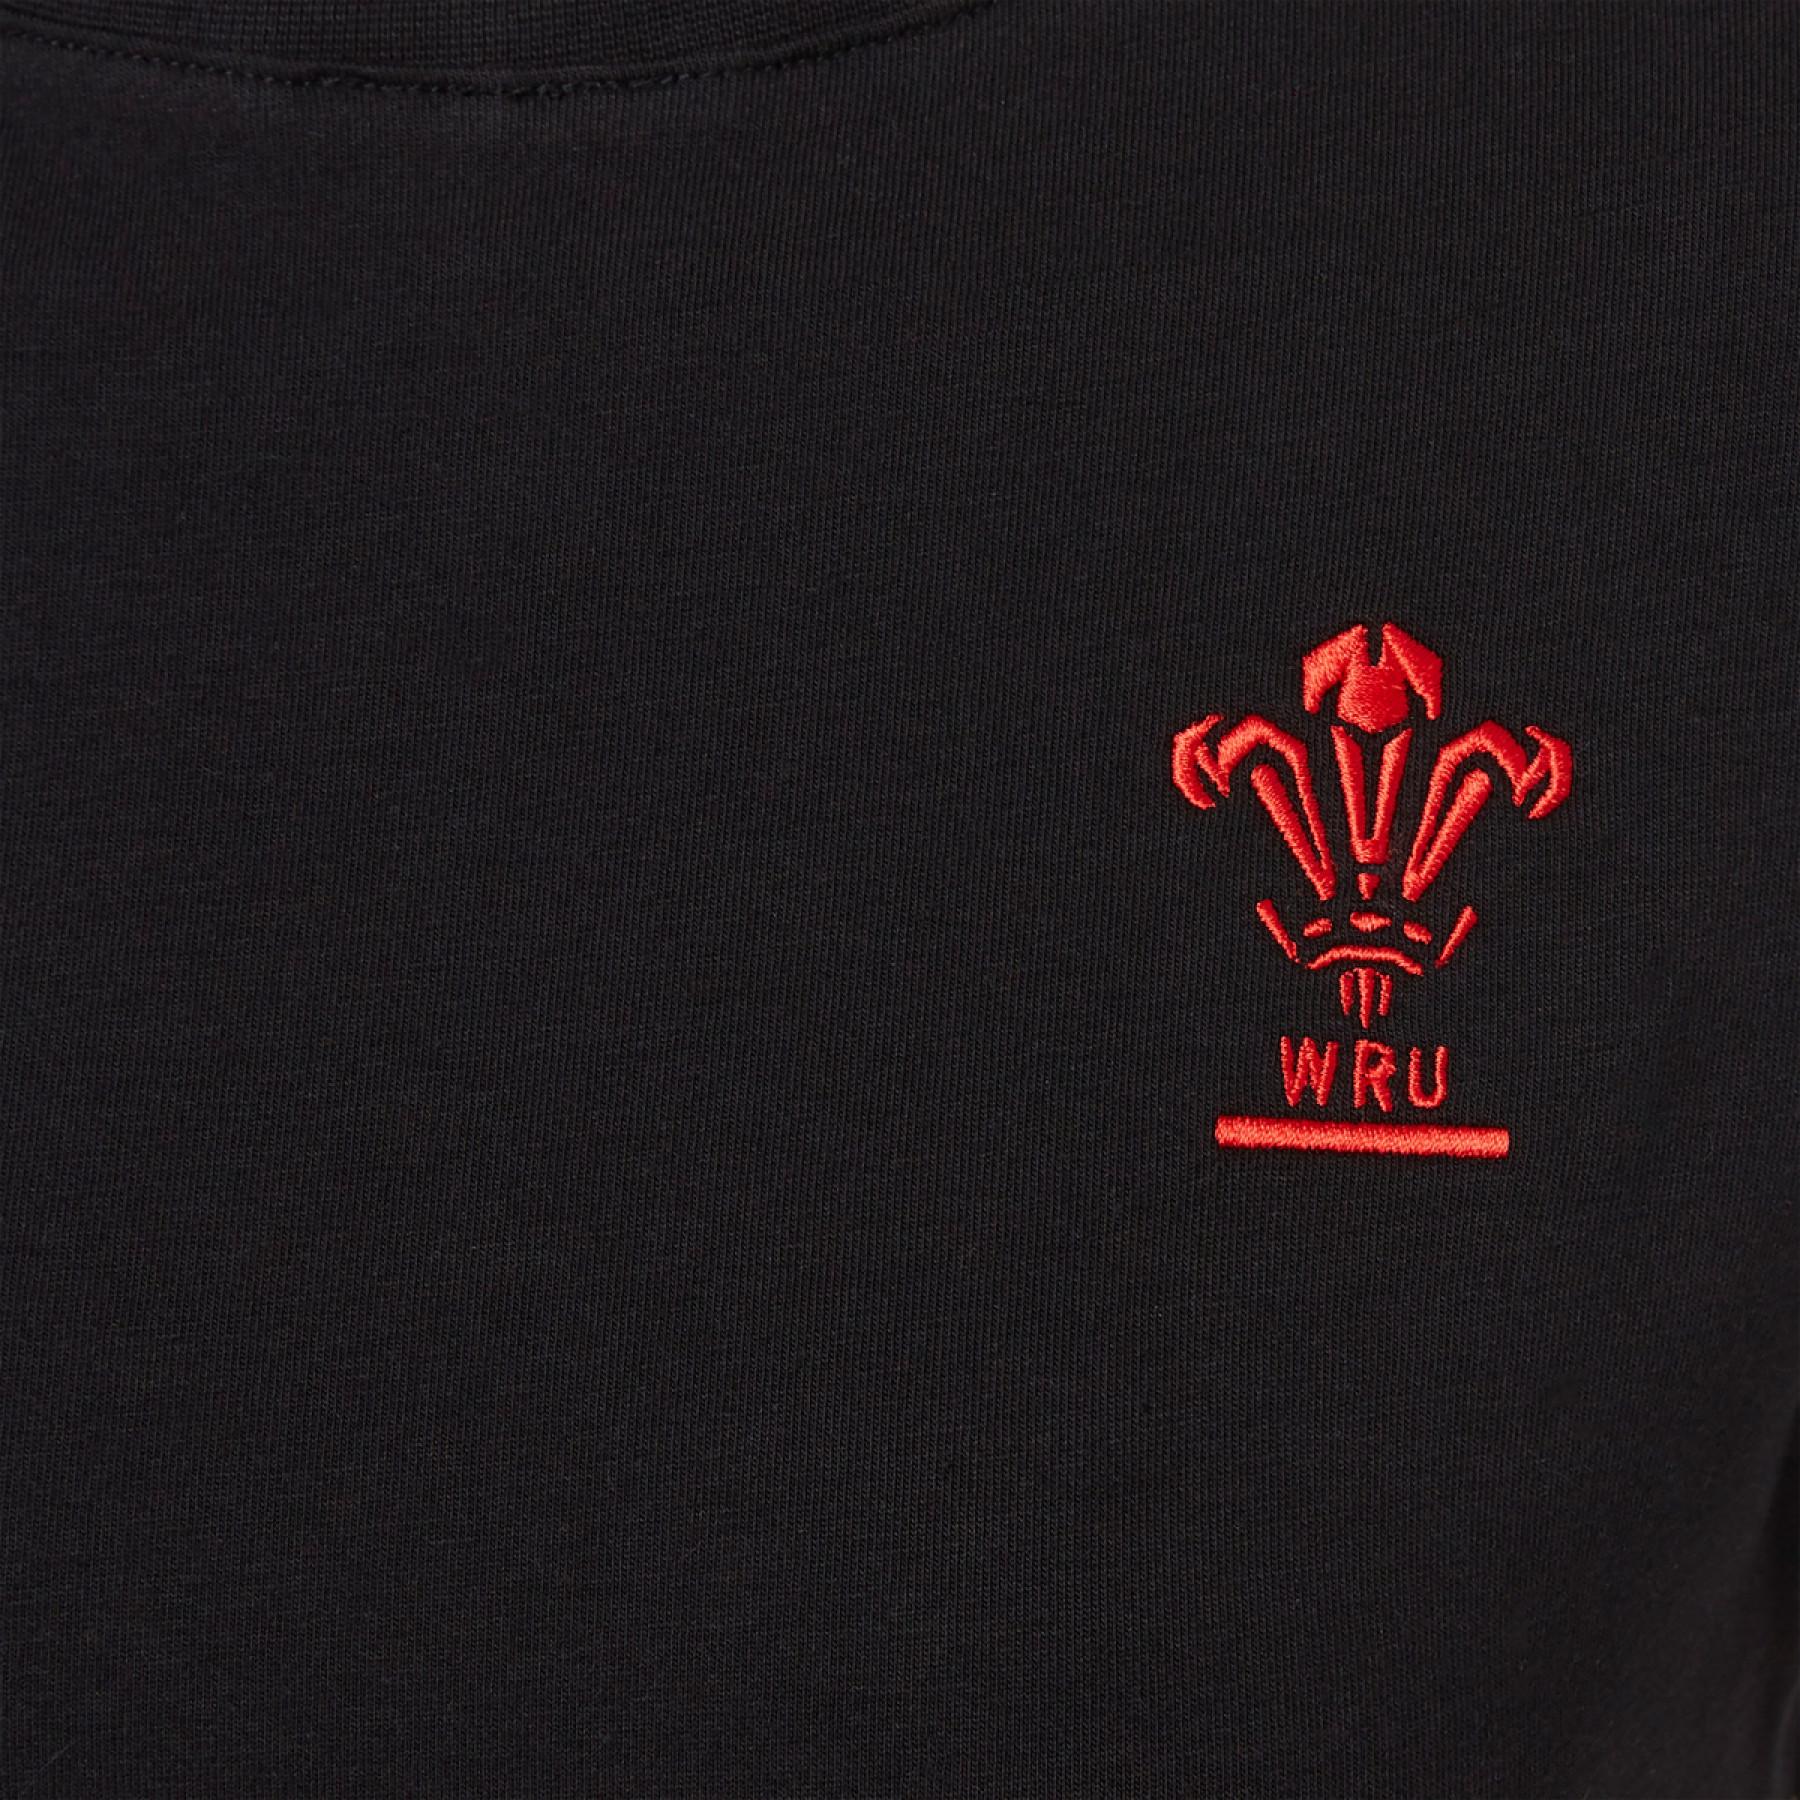 Maillot femme Pays de Galles rugby union 2020/21